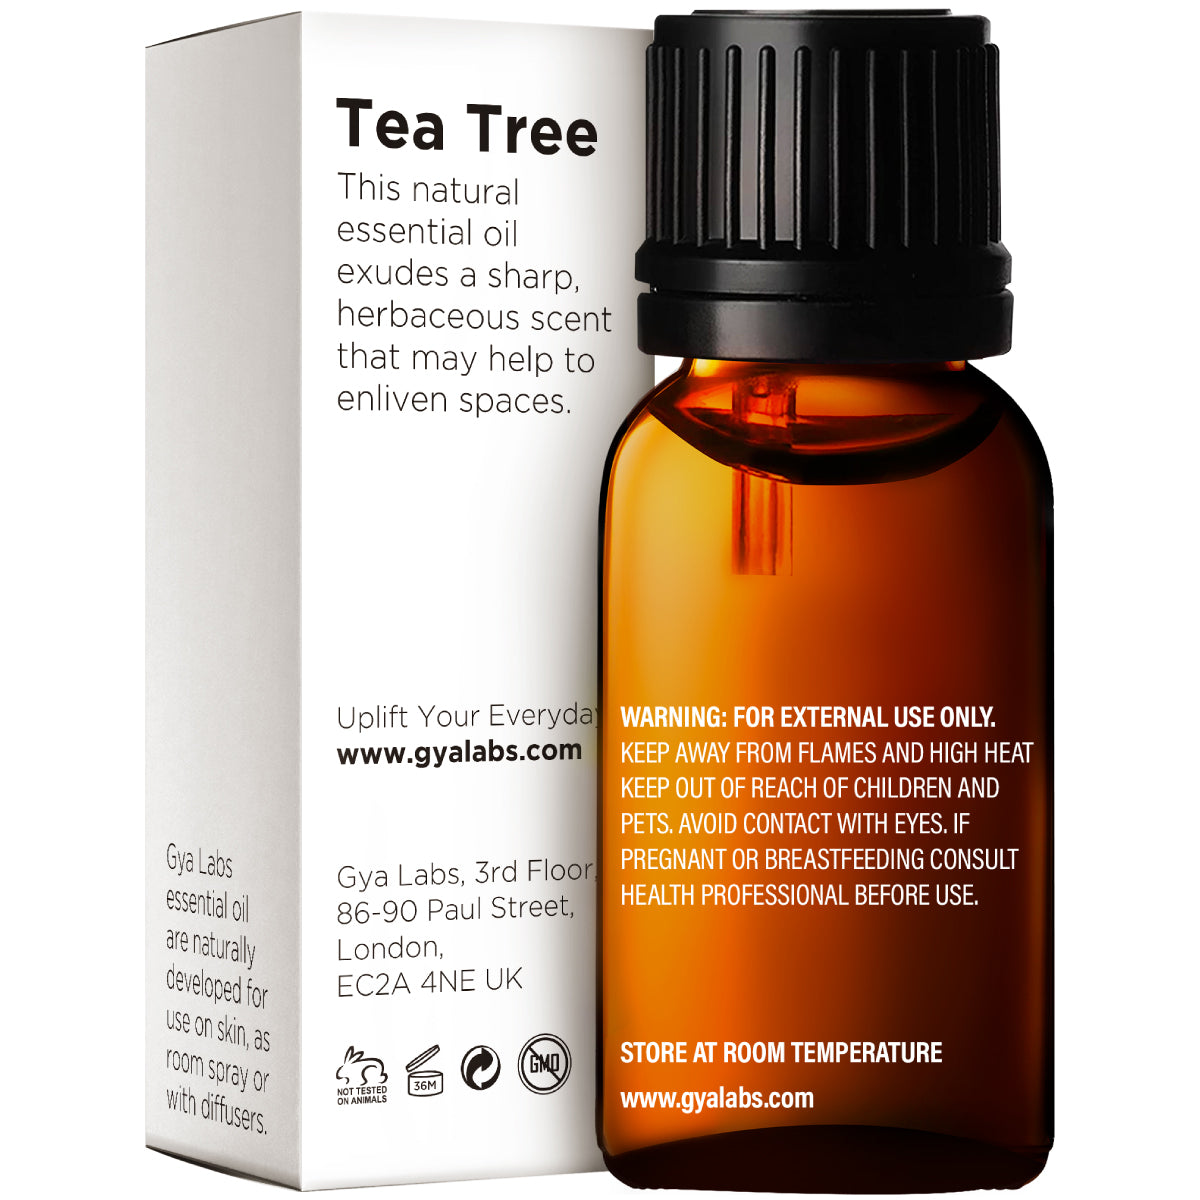 Gya Labs Australian Tea Tree Oil for Skin, Hair, Face & Toenails - 100% Natural Melaleuca Tea Tree Essential Oil for Piercings, Scalp & Hair (0.34 fl oz)